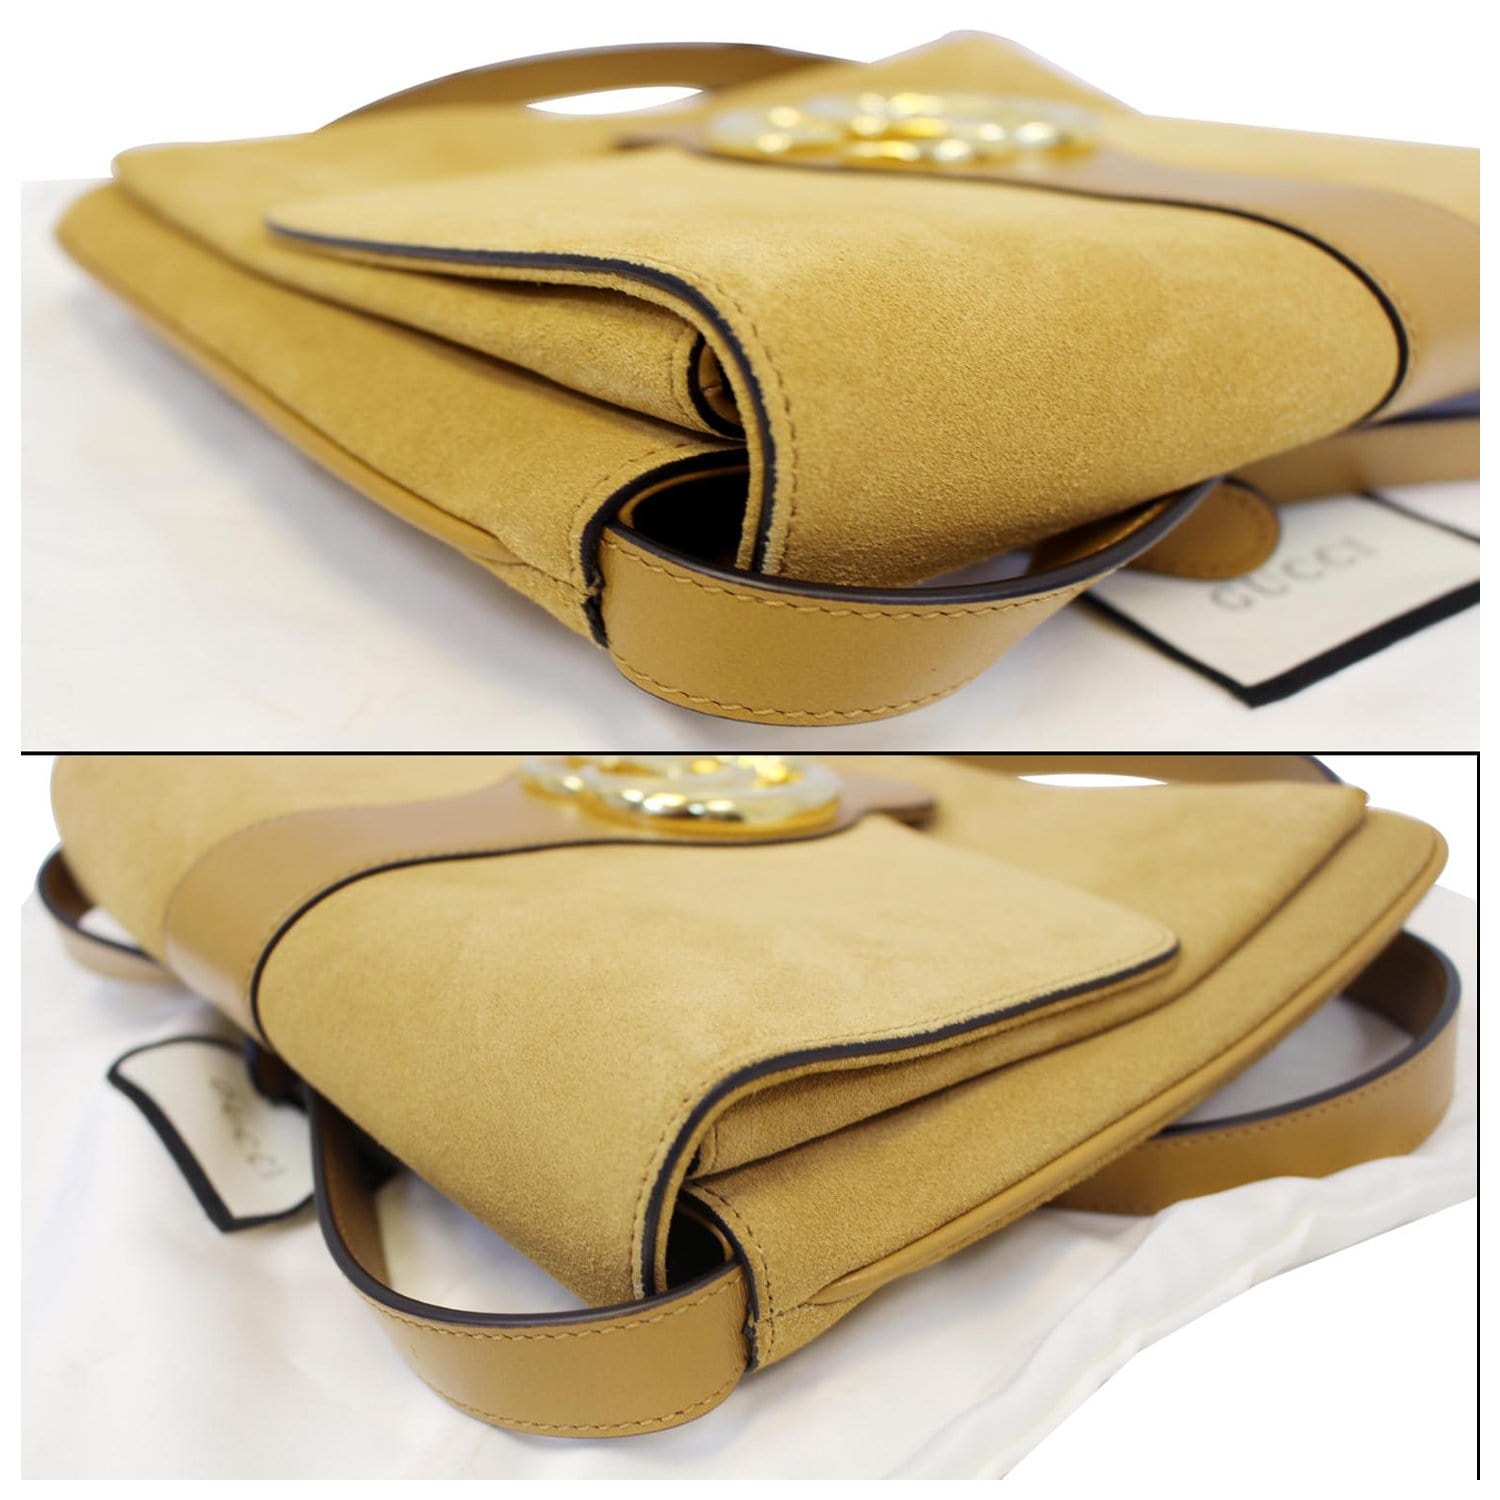 GUCCI Arli Medium Suede Leather Shoulder Crossbody Bag Mustard Yellow-US